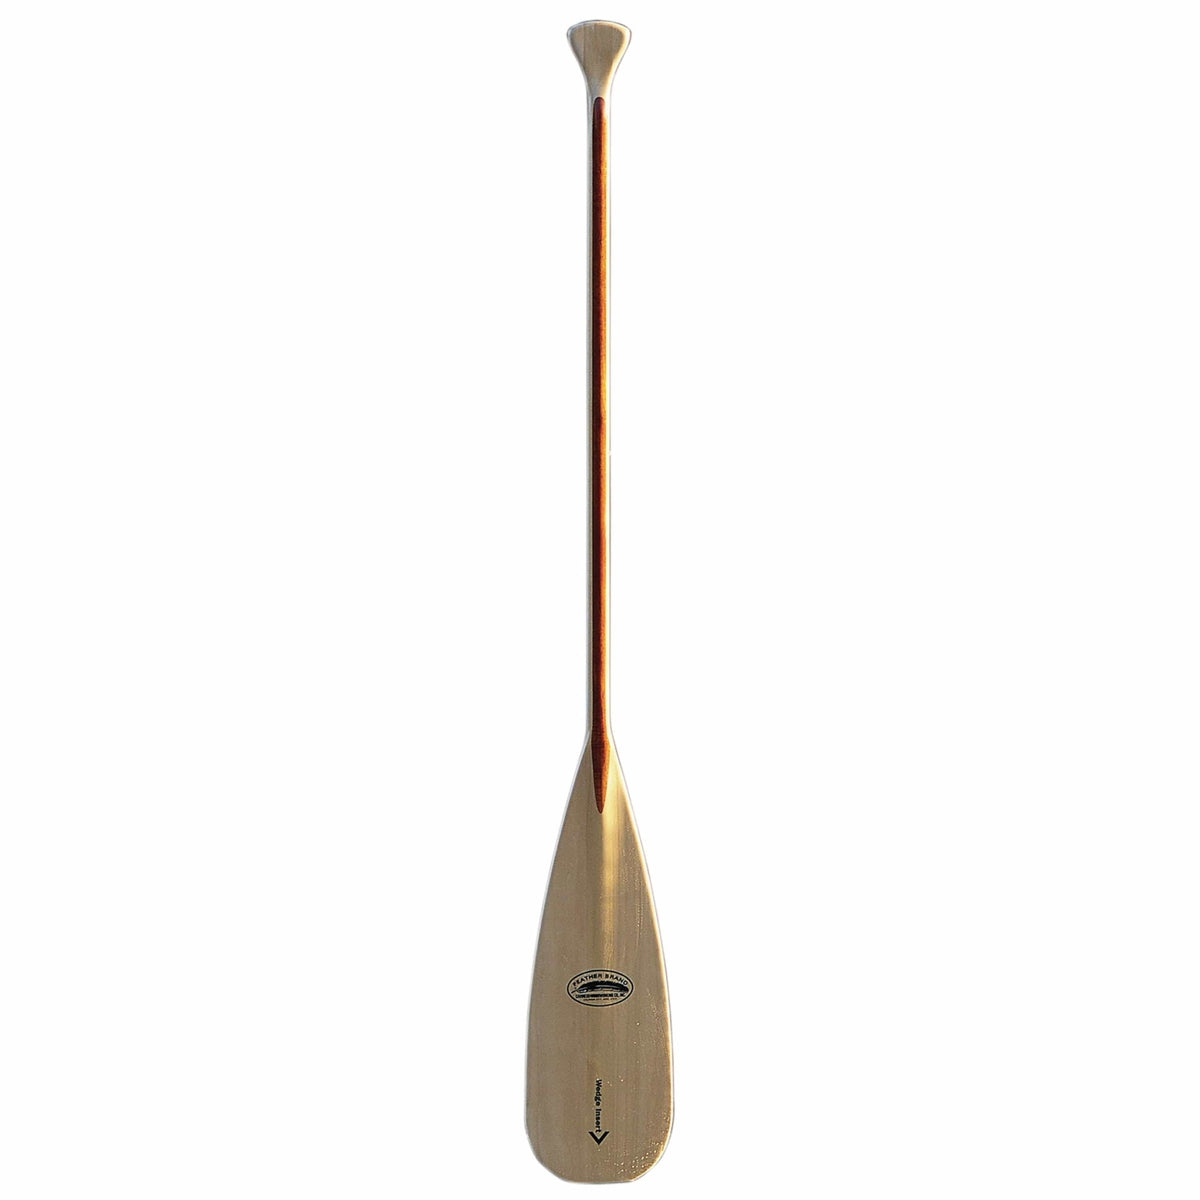 Caviness 800BL Beaver Tail Canoe Paddle Palm Grip 5.5' #855BL